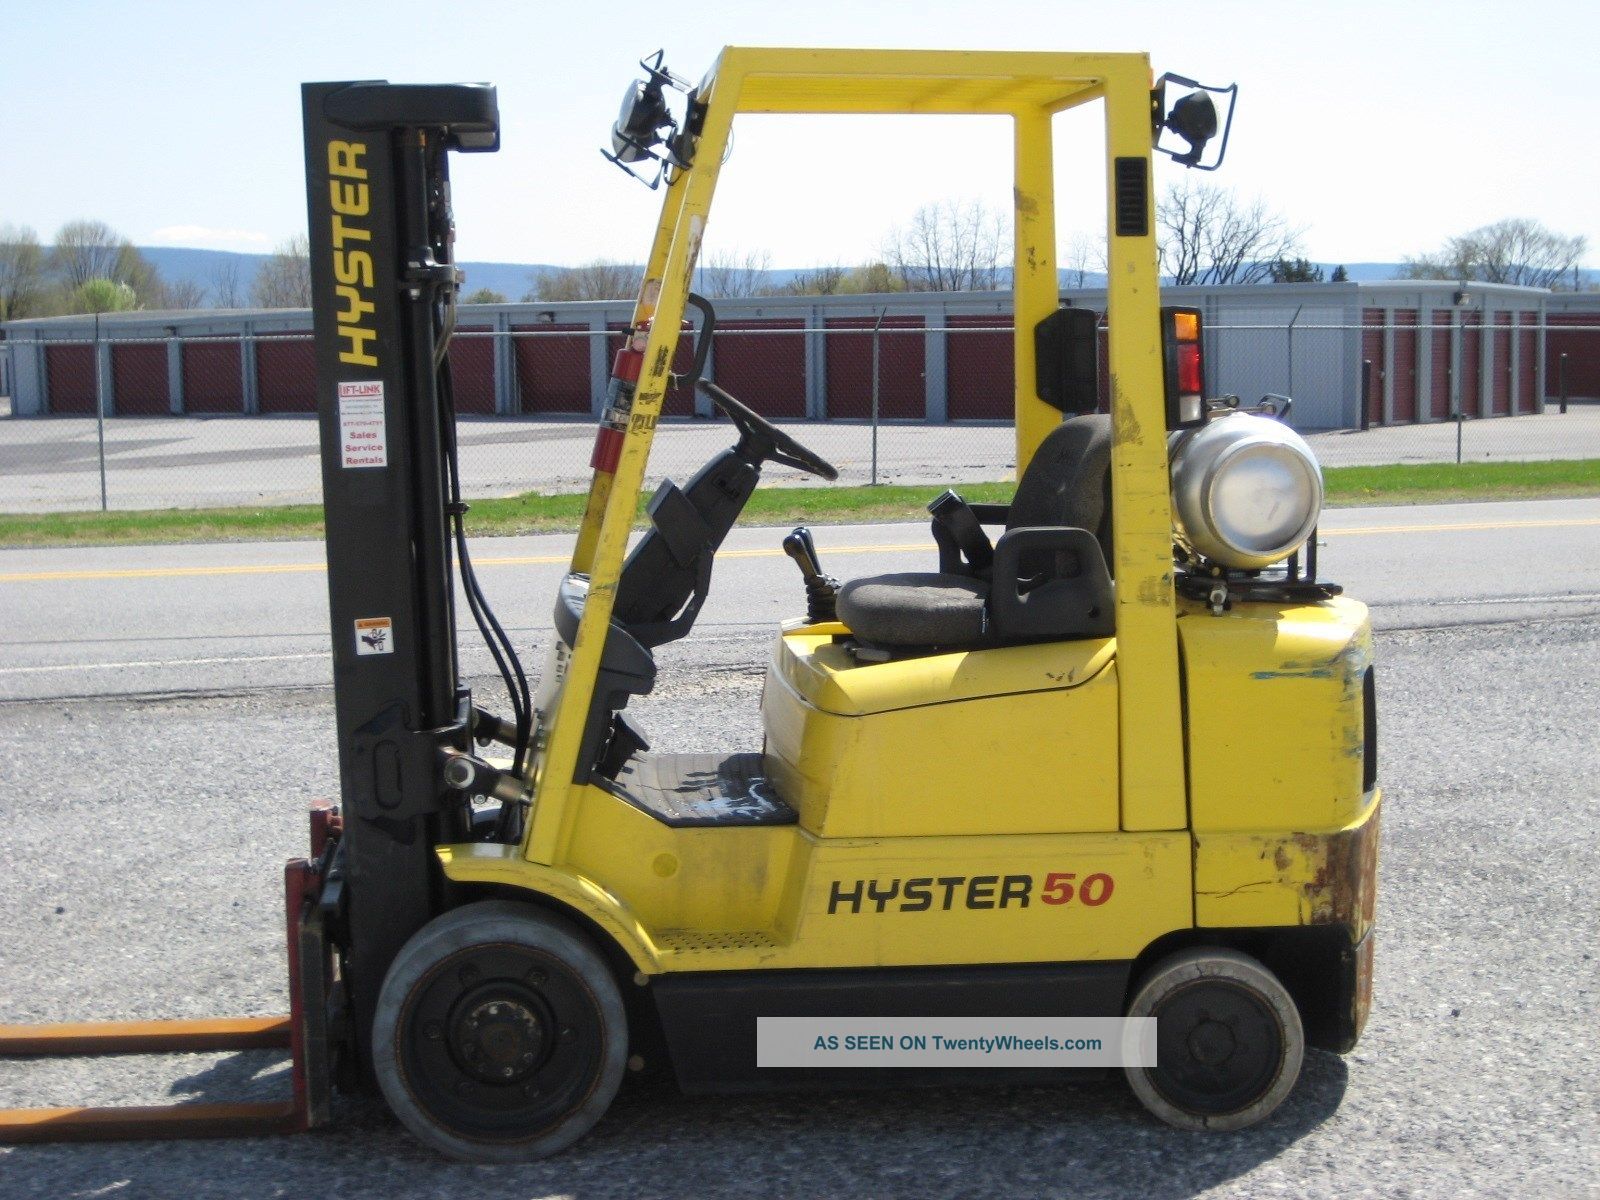 Hyster 50 Forklift Specs